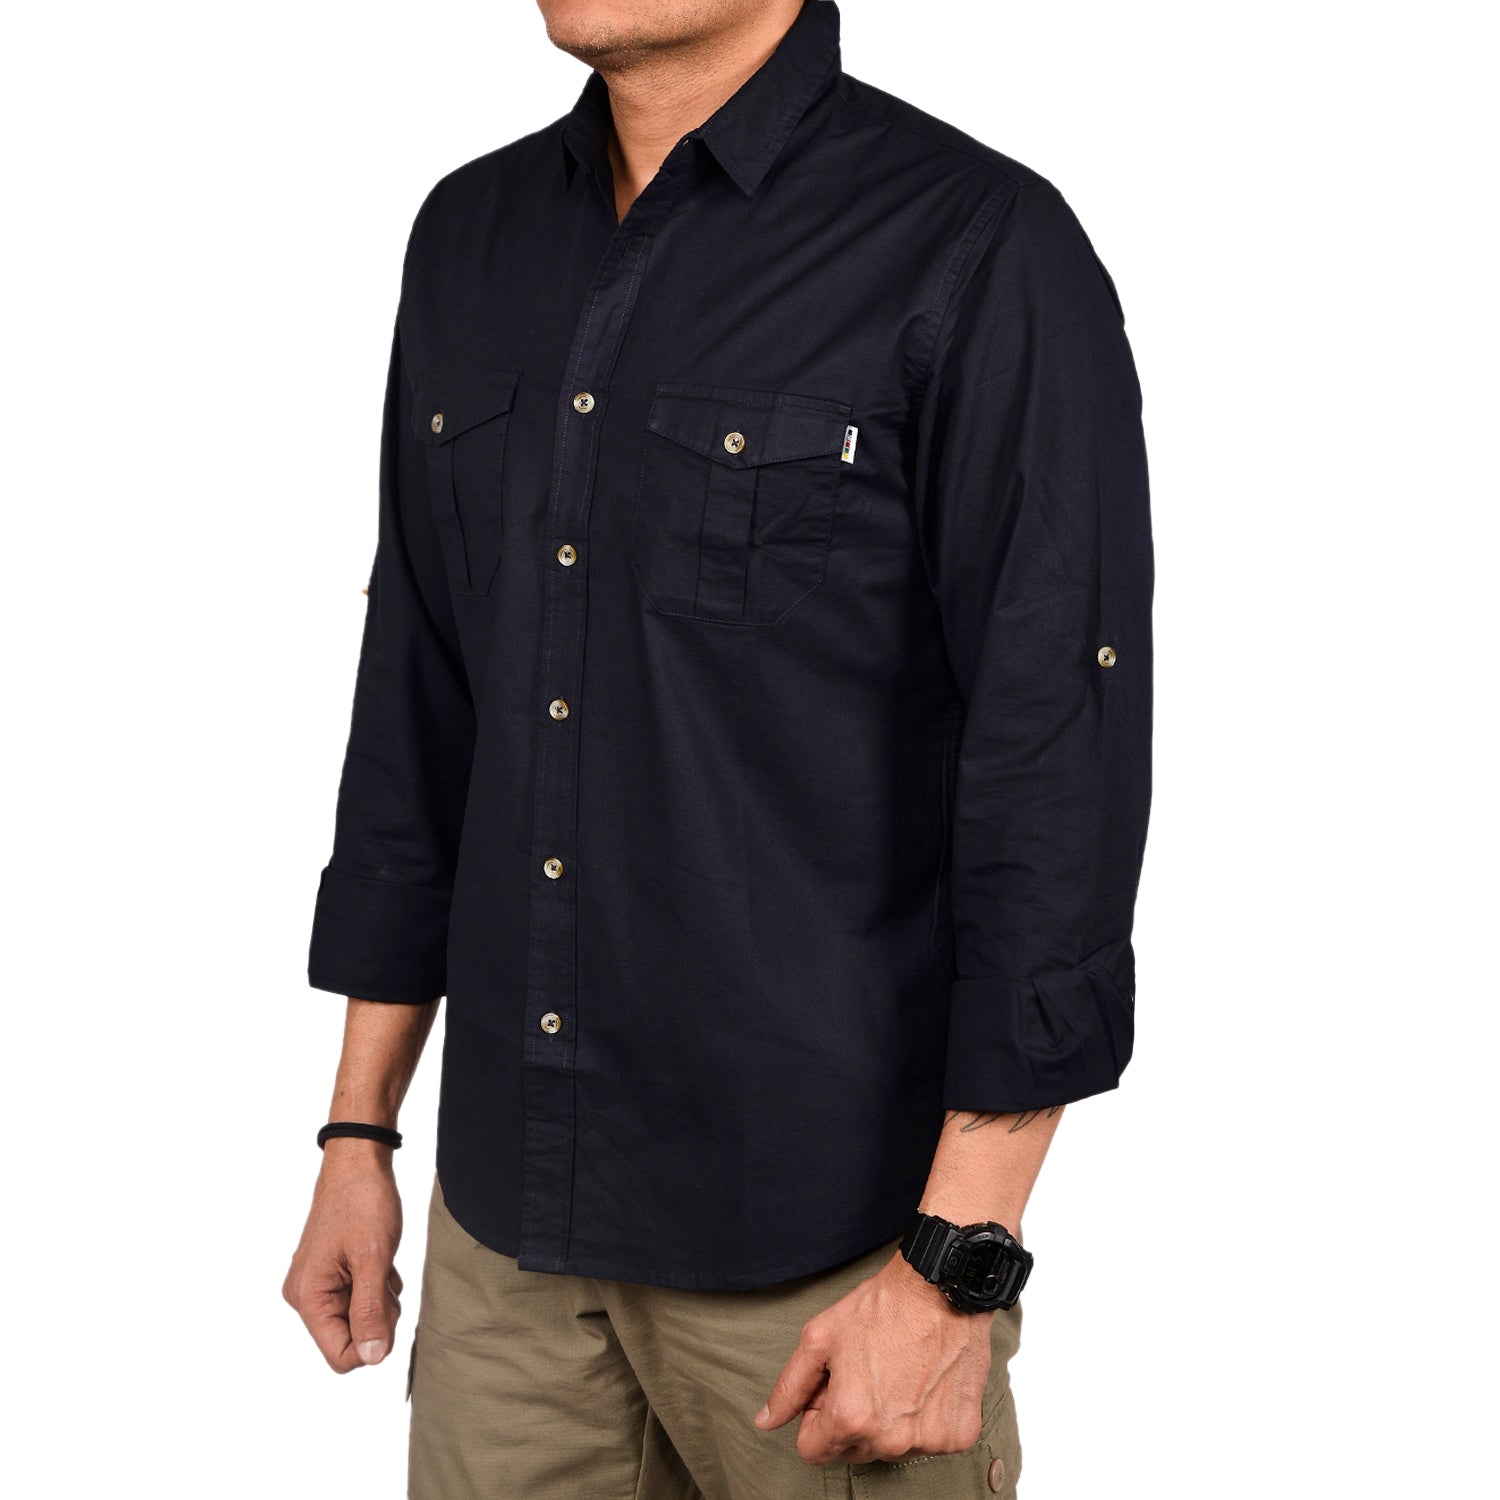 Buy Gokyo Corbett Cargo Full Sleeve Shirt | Shirts at Gokyo Outdoor Clothing & Gear